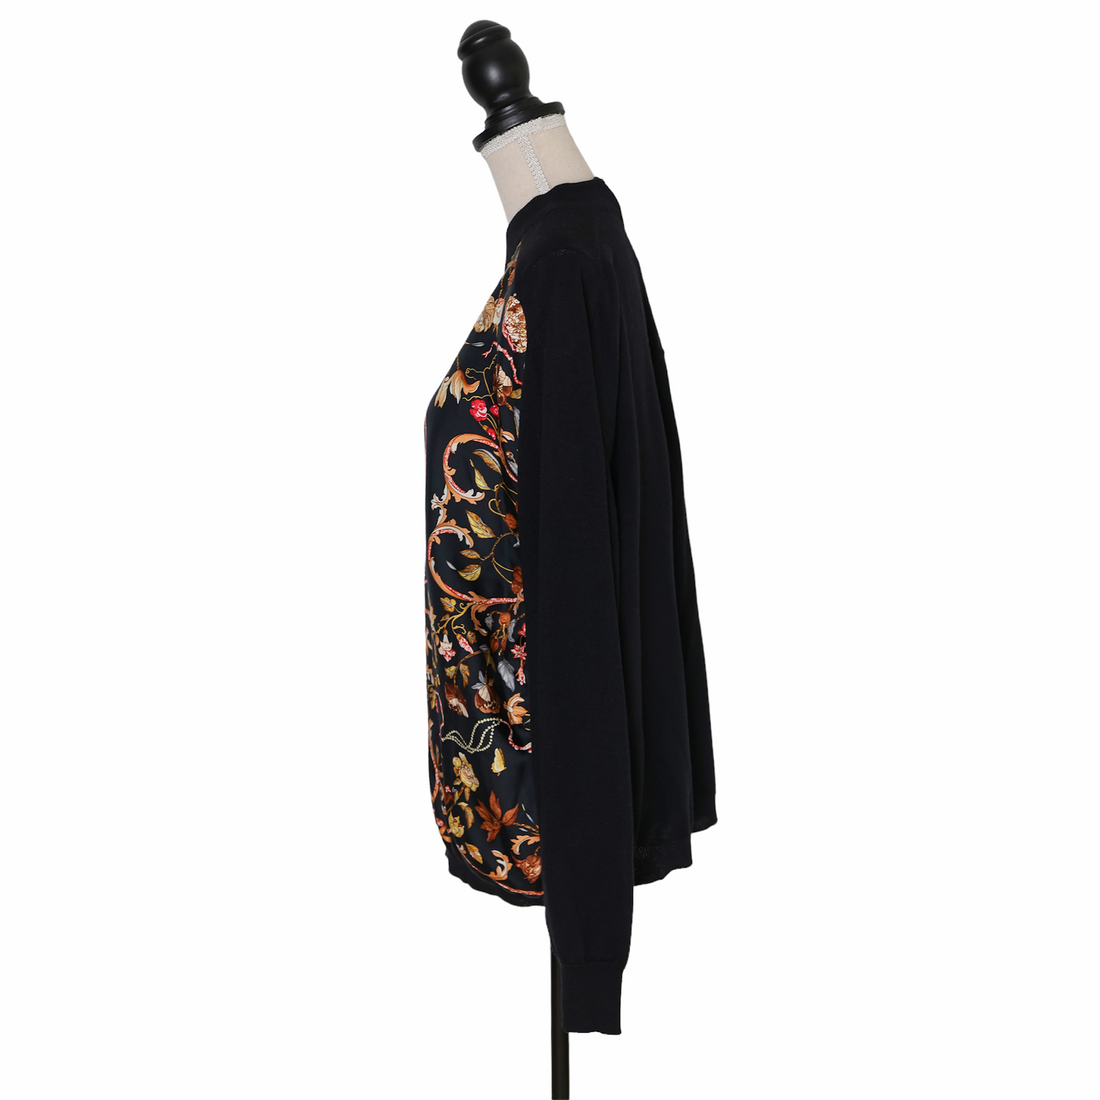 Hermès Pullover mit Vogel-Print